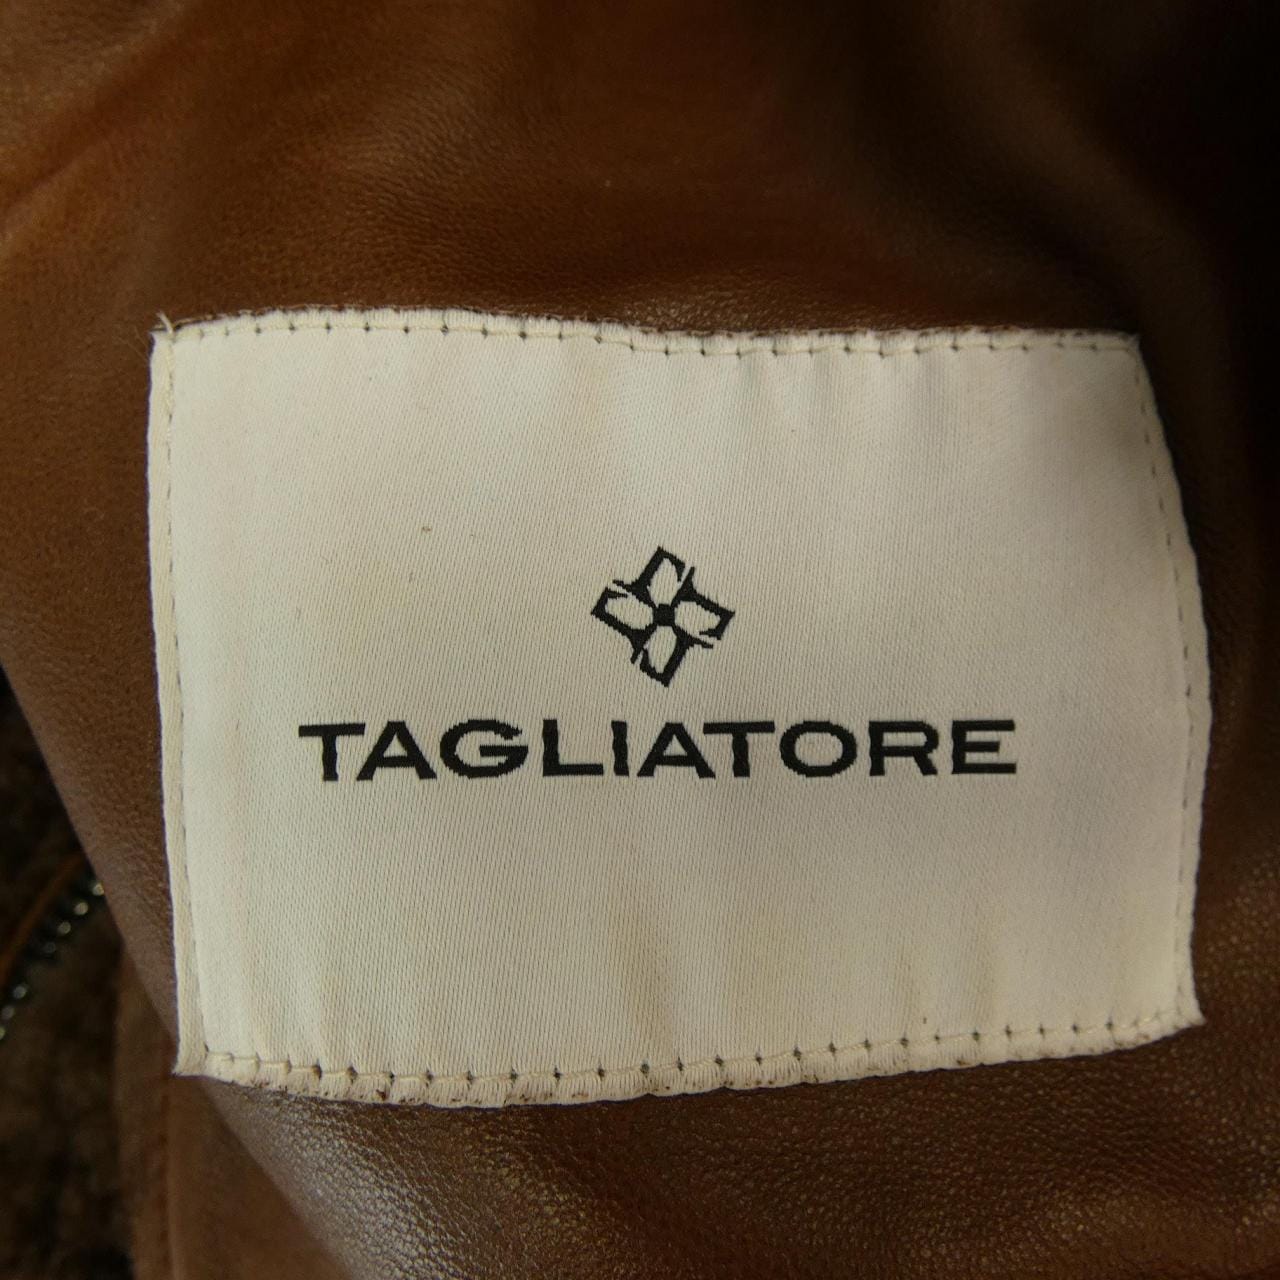 TAGLIATORE Mouton jacket